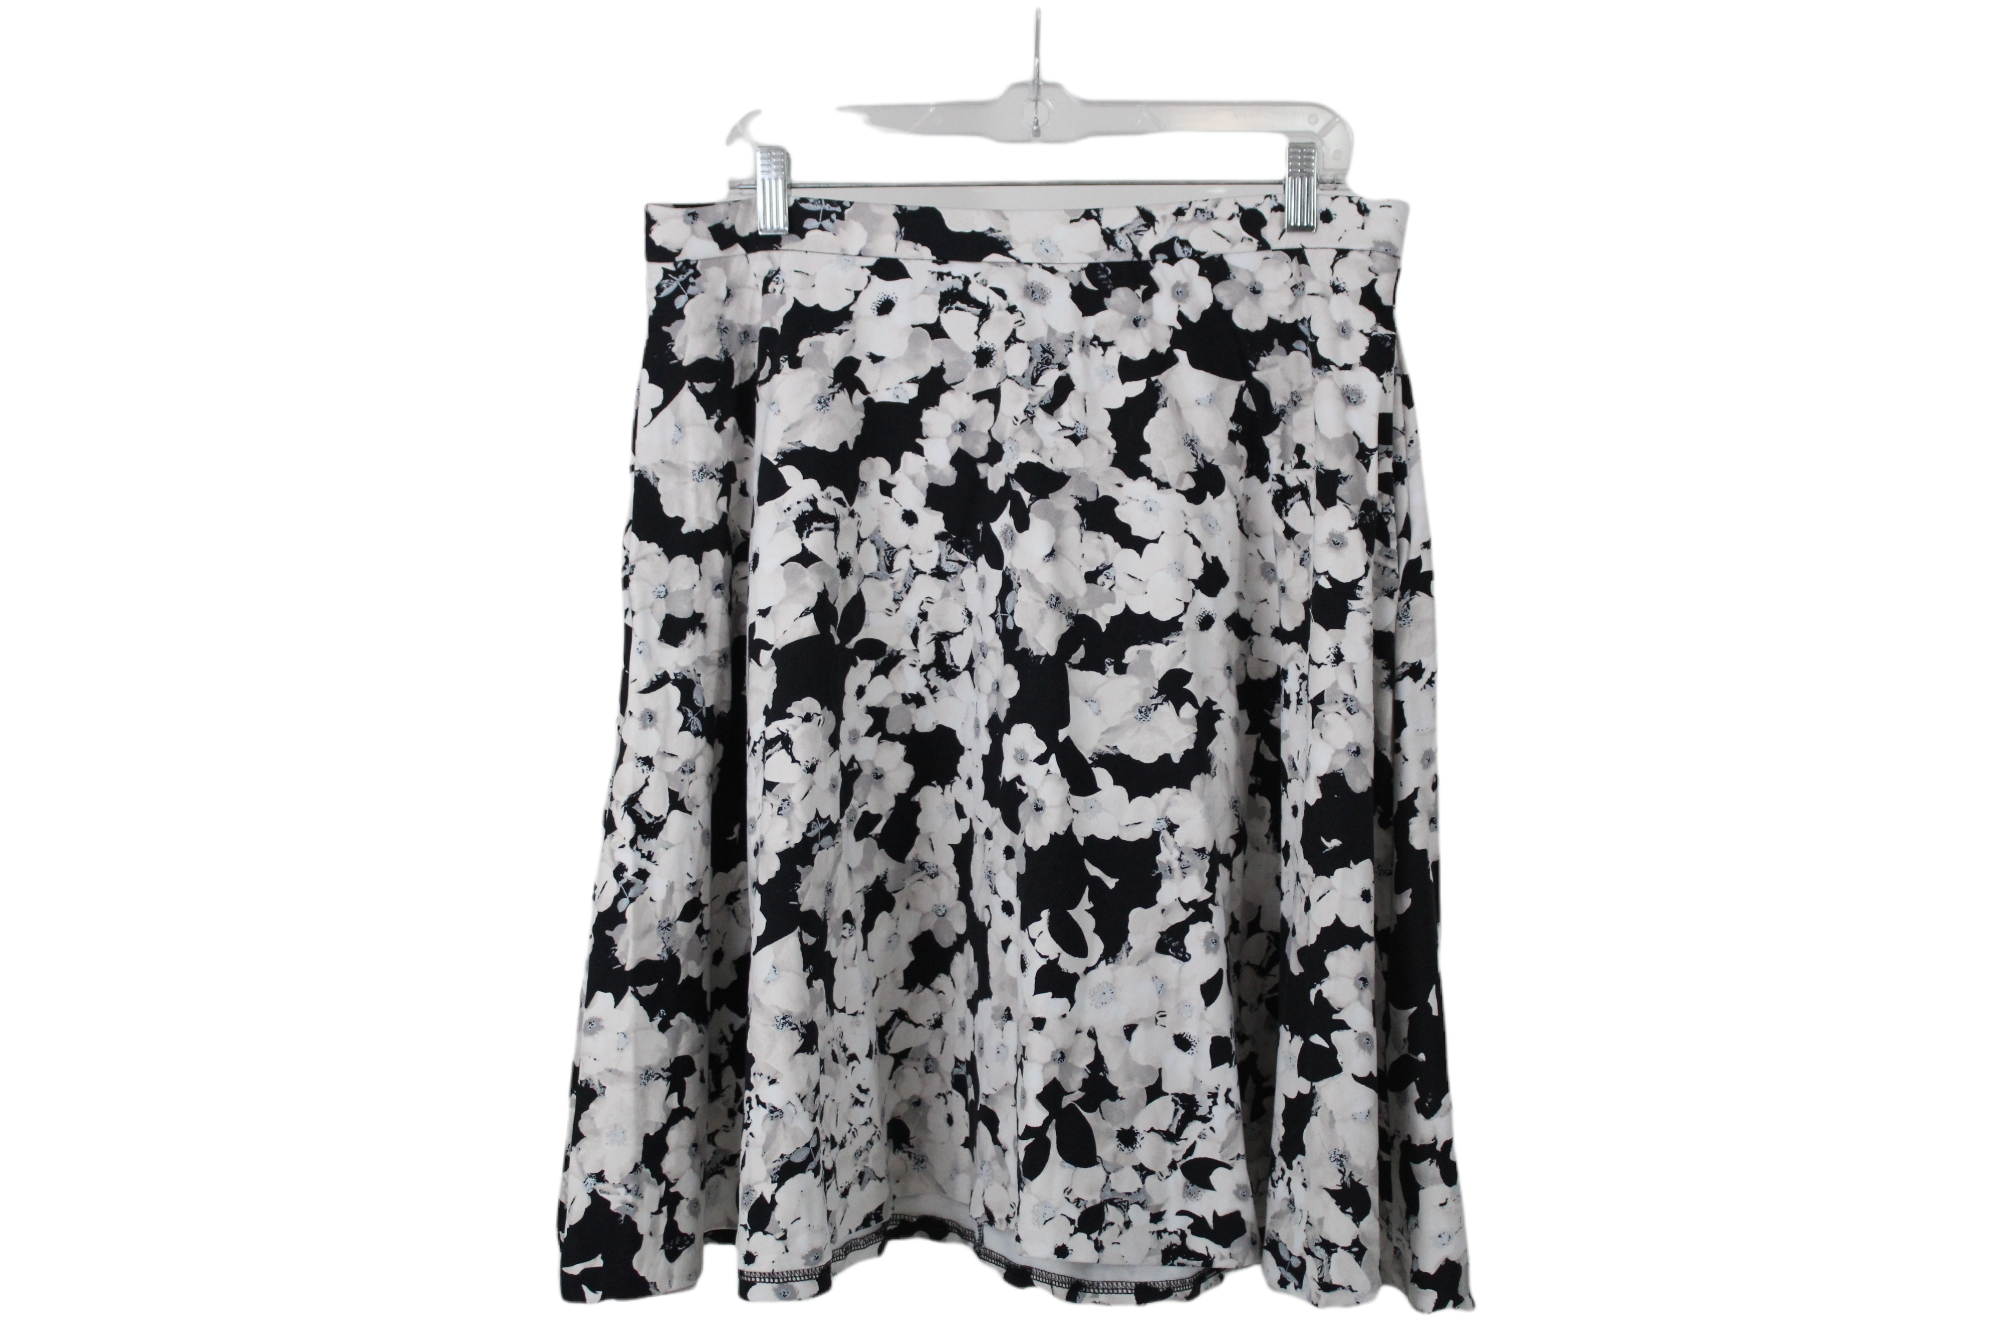 Adrienne Vittadini White Cotton Blend Skirt Women's Size 12